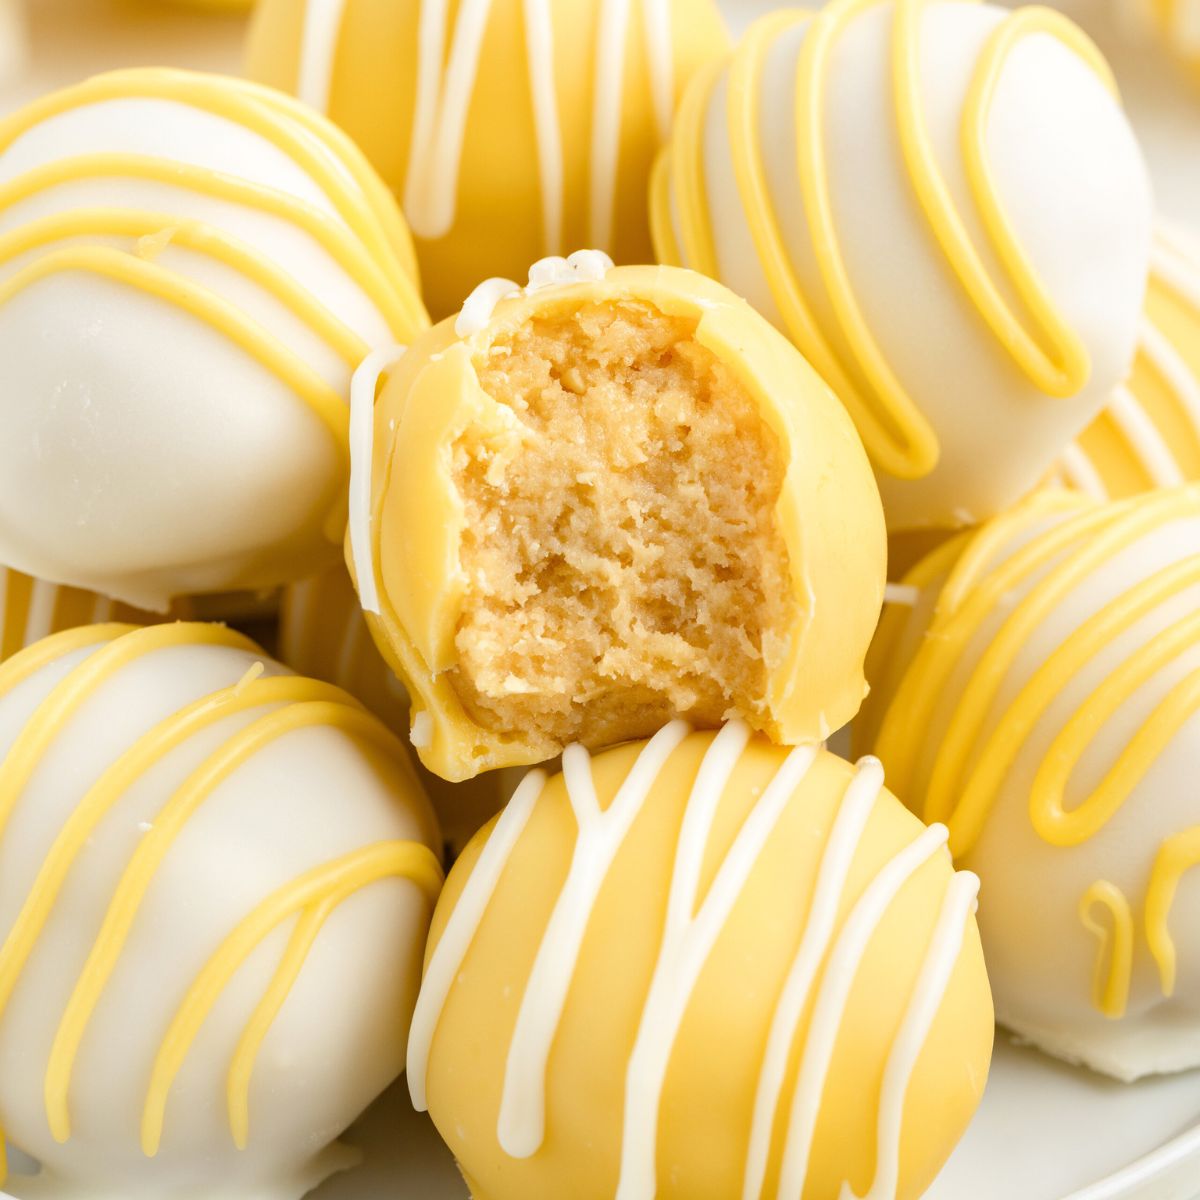 Pile of lemon Oreo truffle balls with creamy centers.